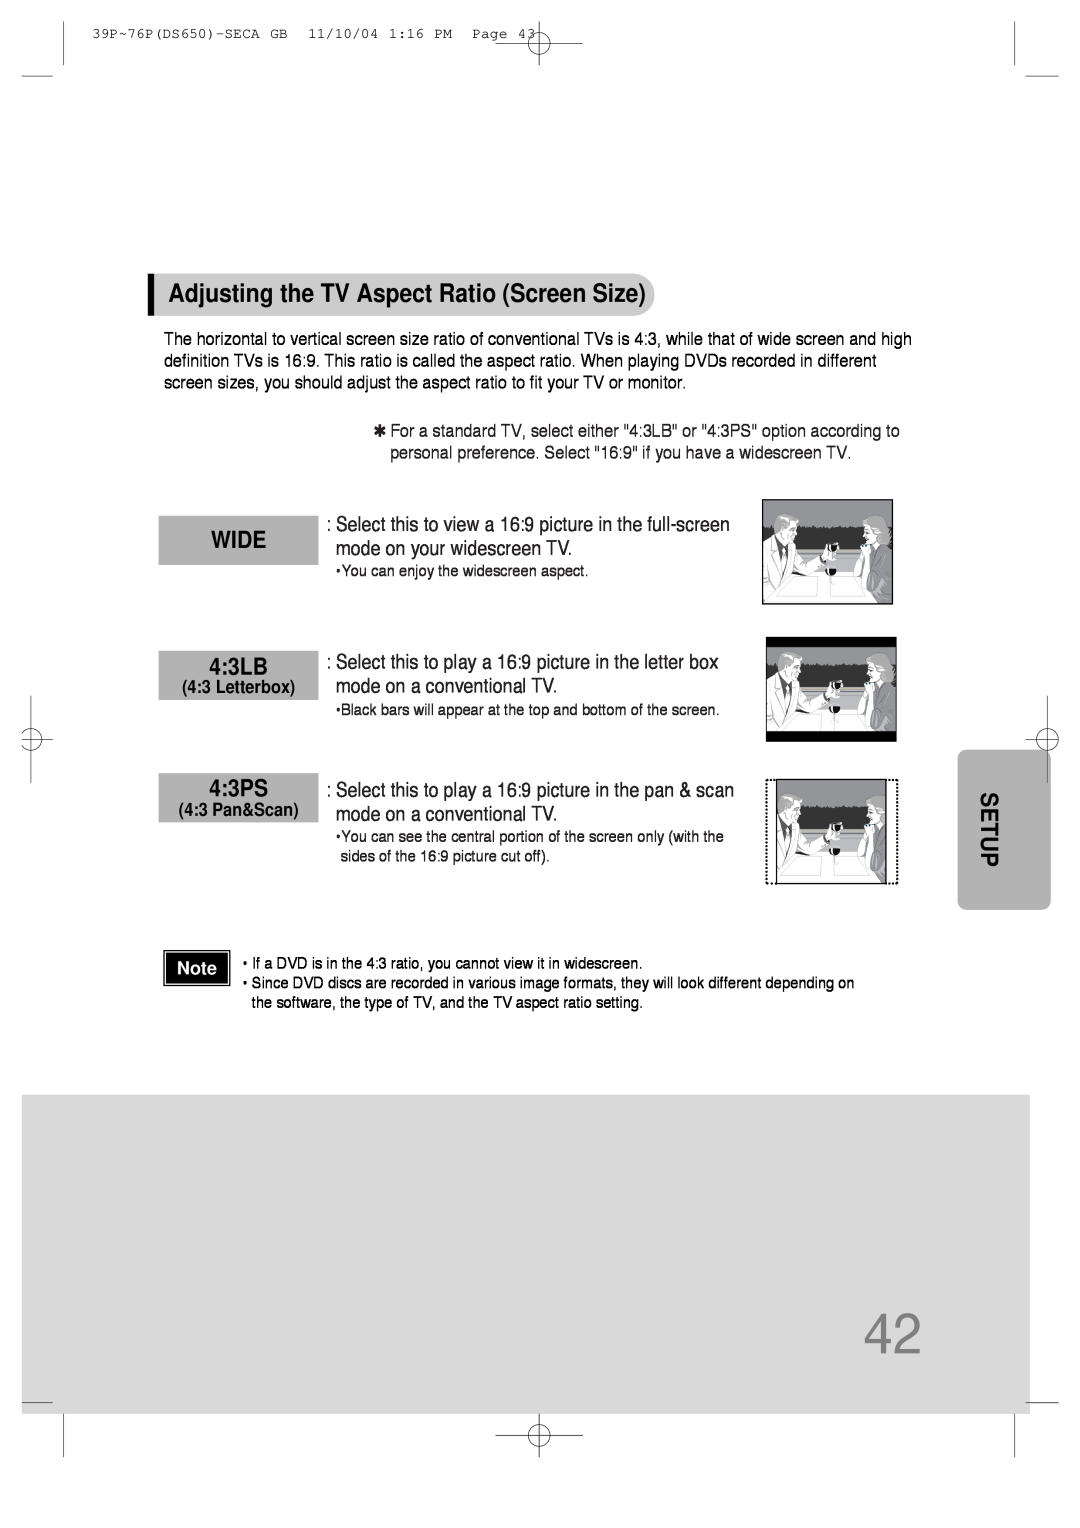 Samsung HT-DS650 instruction manual Adjusting the TV Aspect Ratio Screen Size, WIDE 4:3LB, 4:3PS, Setup 